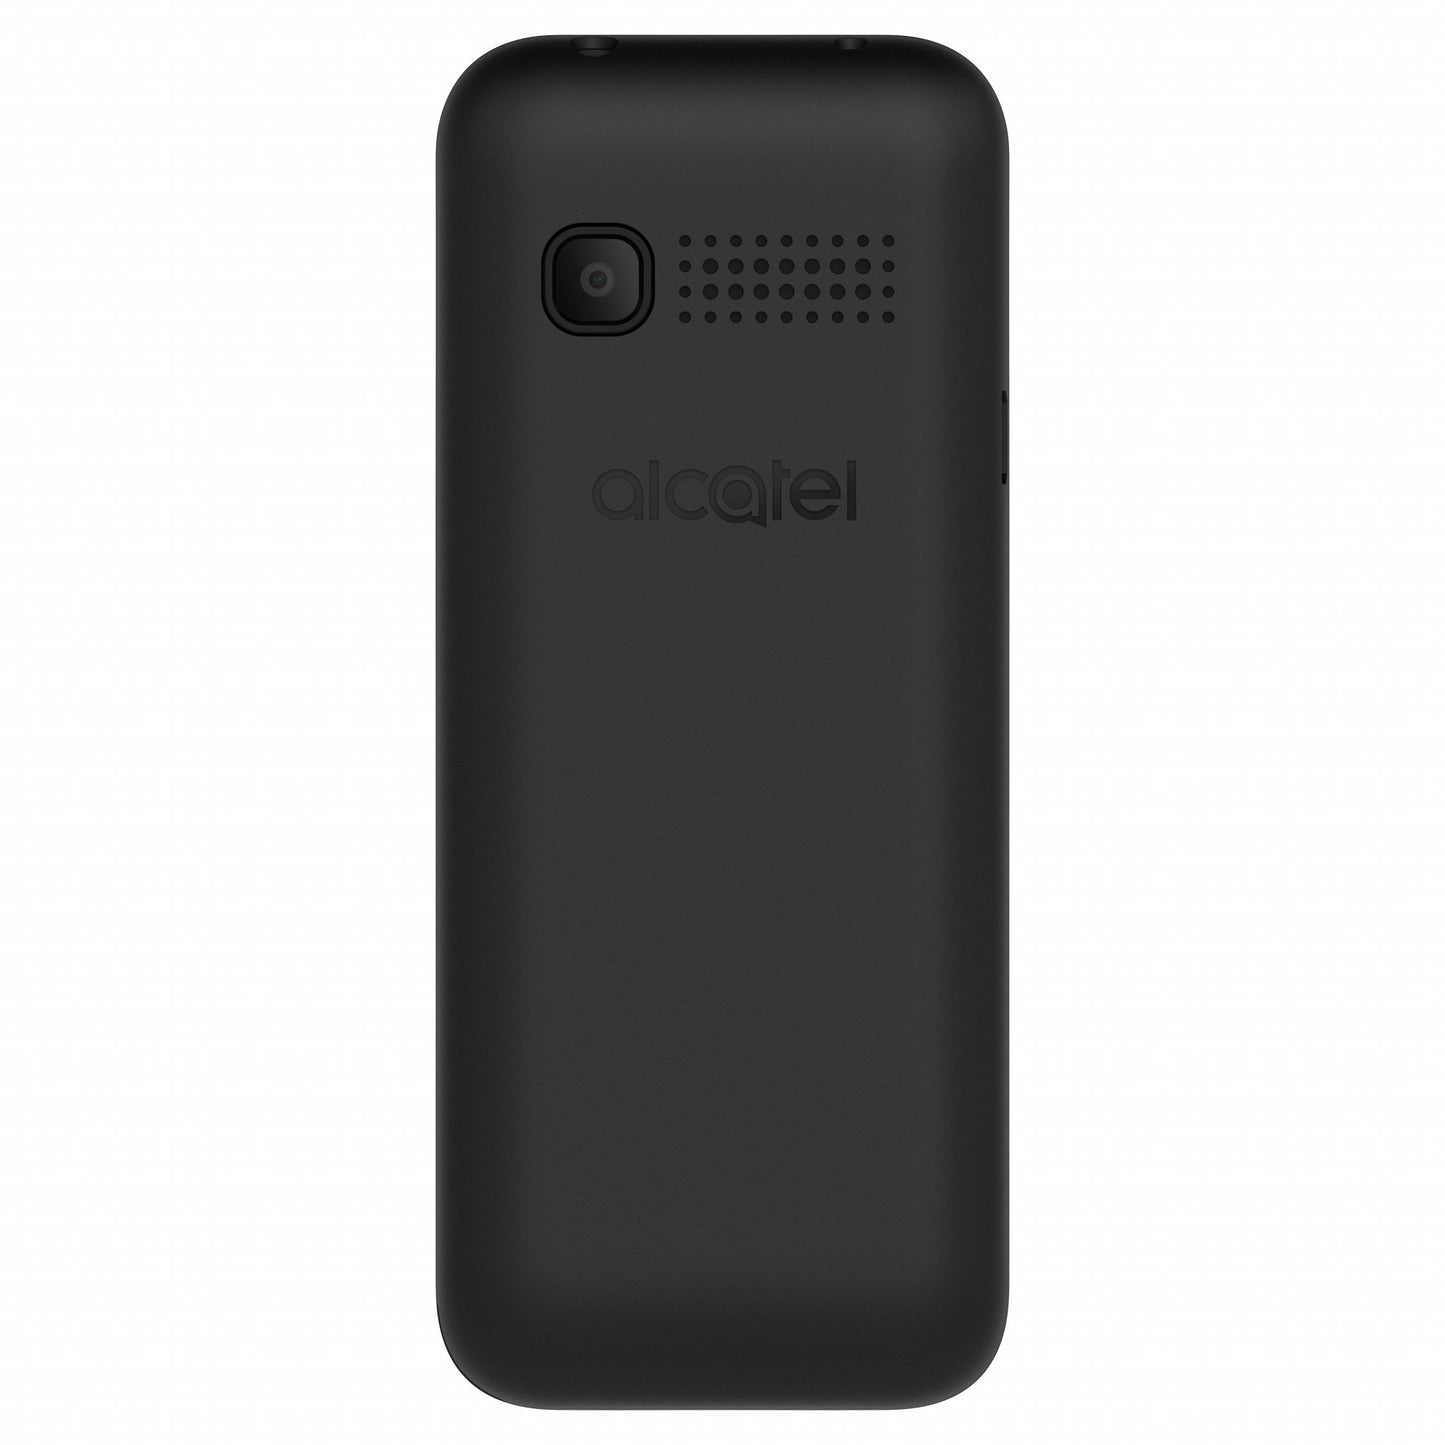 Alcatel 10.68 4.57 cm (1.8") 63 g Black Feature phone